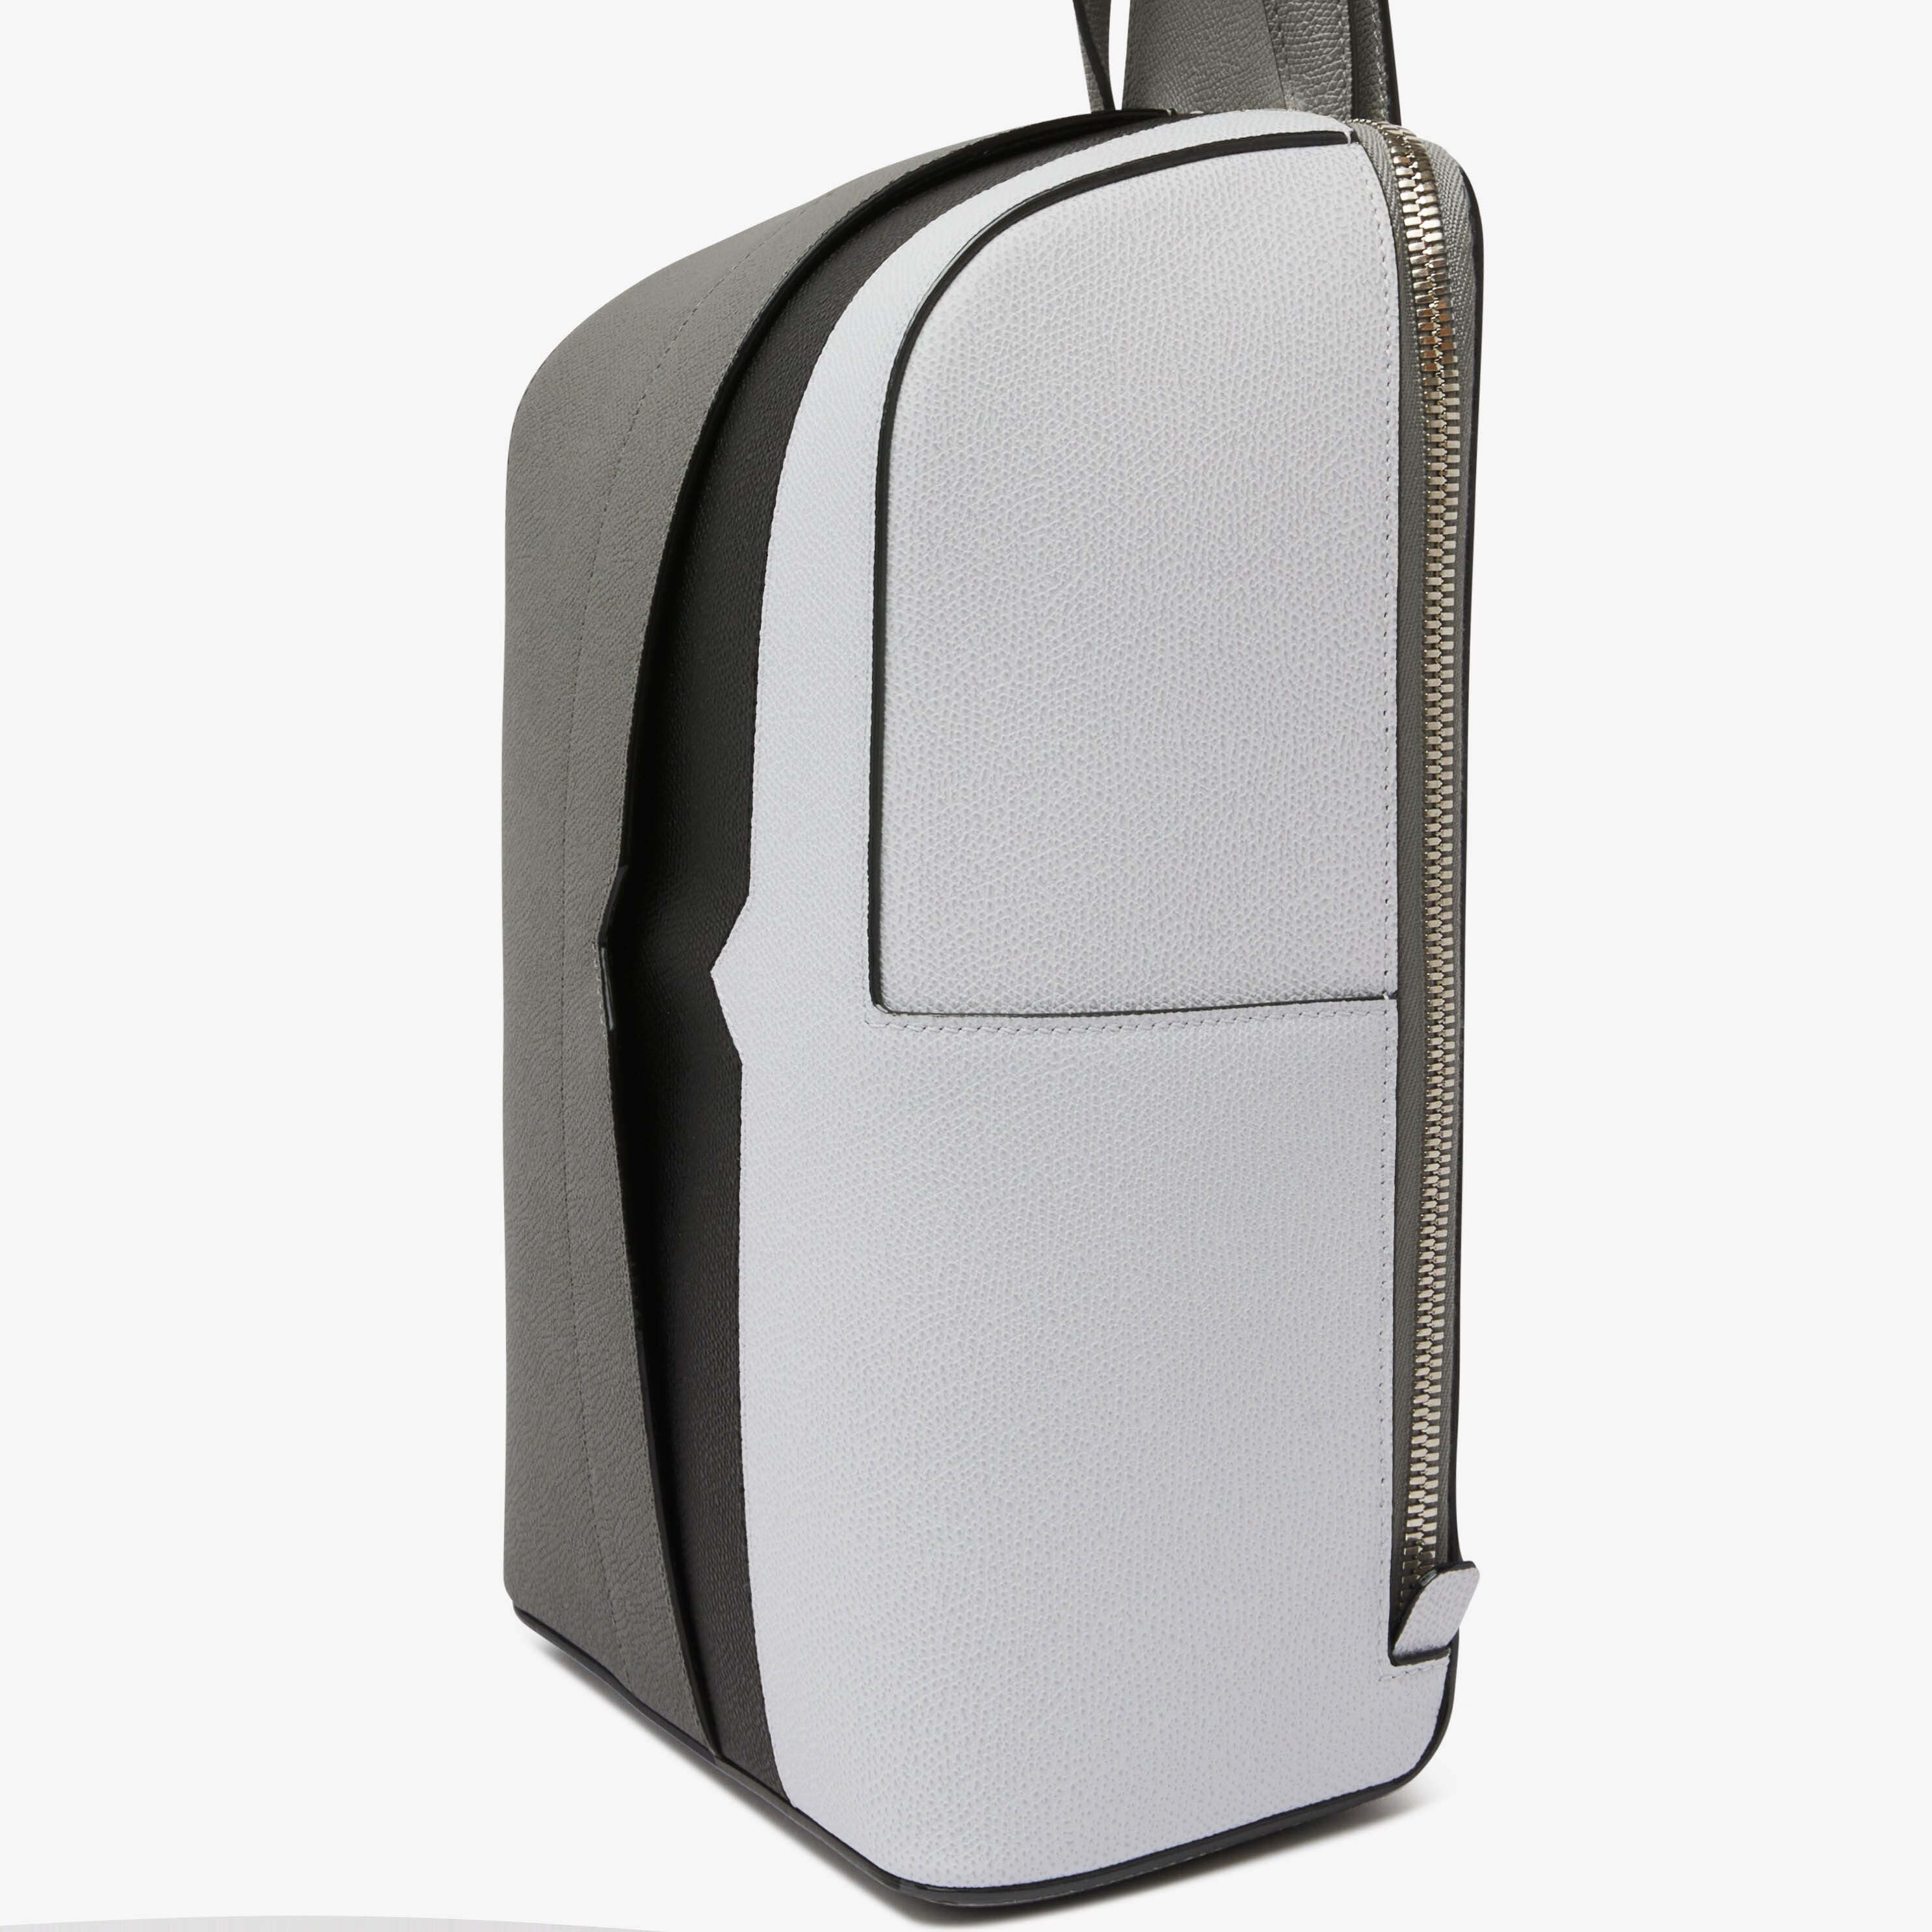 V-line Intarsia One Shoulder Backpack - Cement Grey/Black/Stone Gery - Intarsio V New Zaino - Valextra - 3